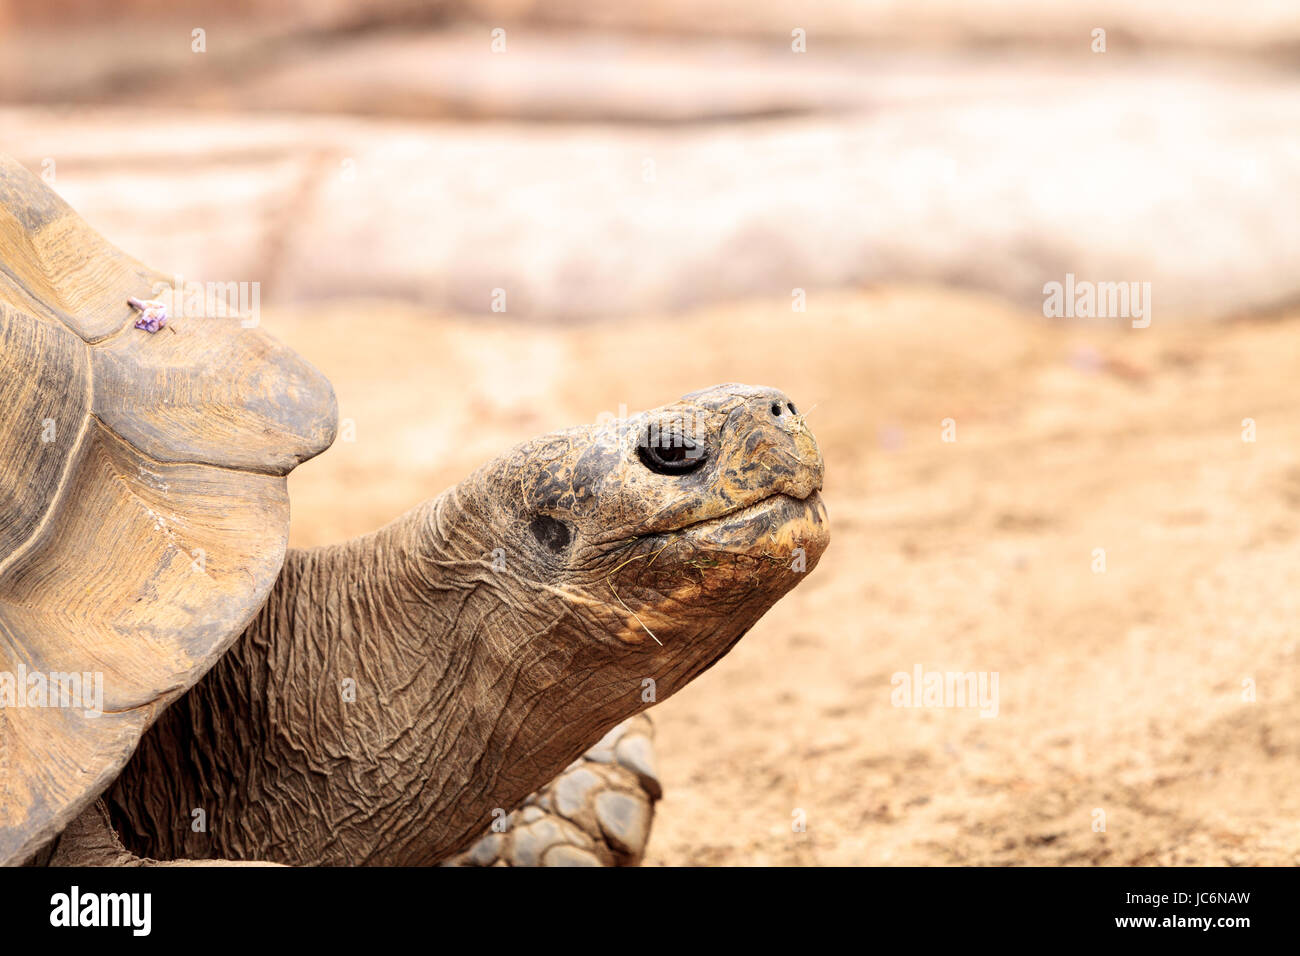 Sierra Negra Tortoise Chelonoidis nigra guntheri is part of the Galapagos Island giant tortoises. Stock Photo